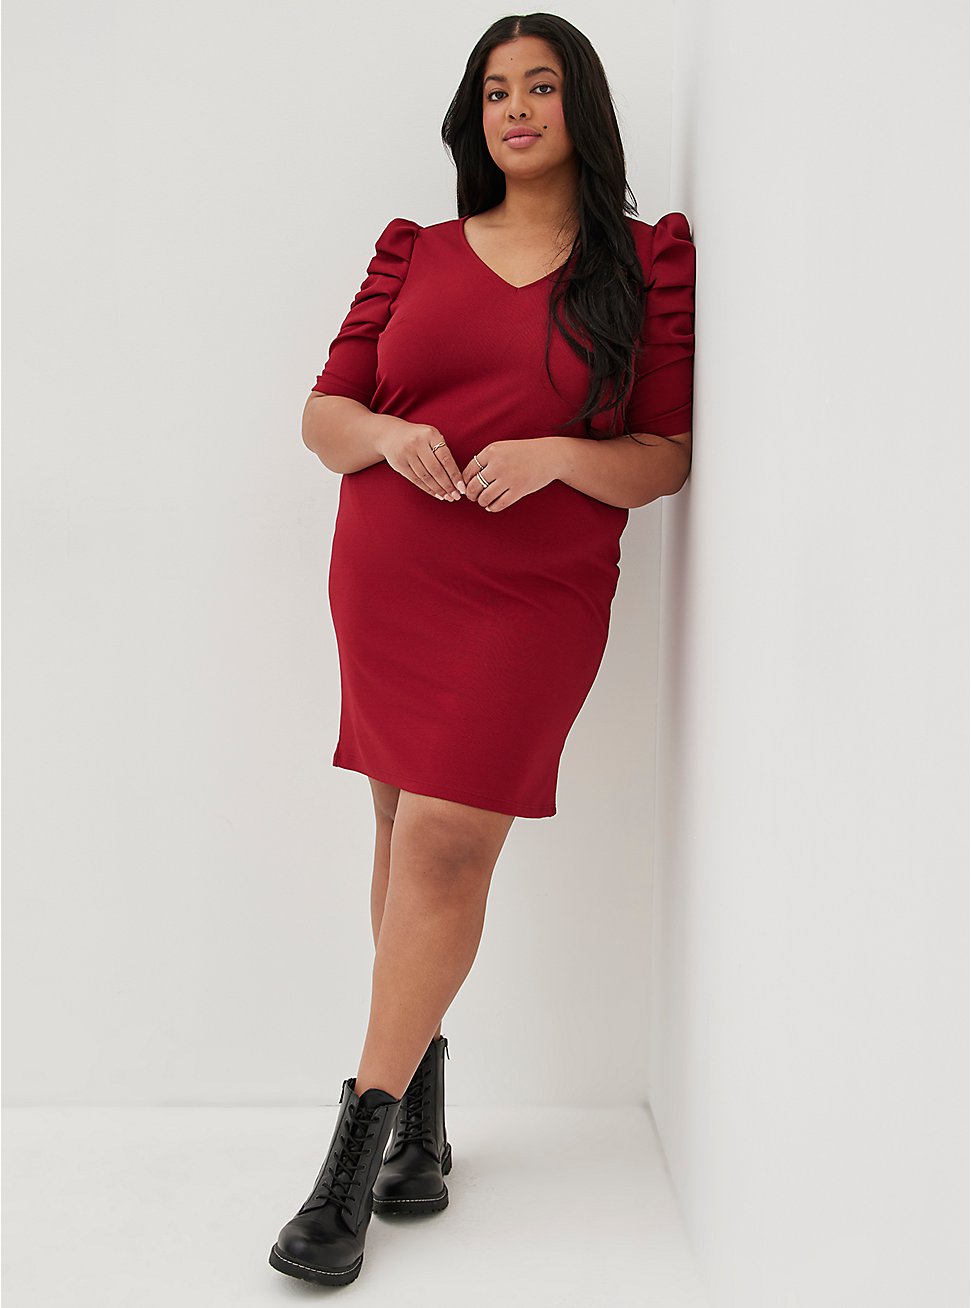 Puff Sleeve Mini Dress - Textured Knit Red, BURGUNDY, hi-res